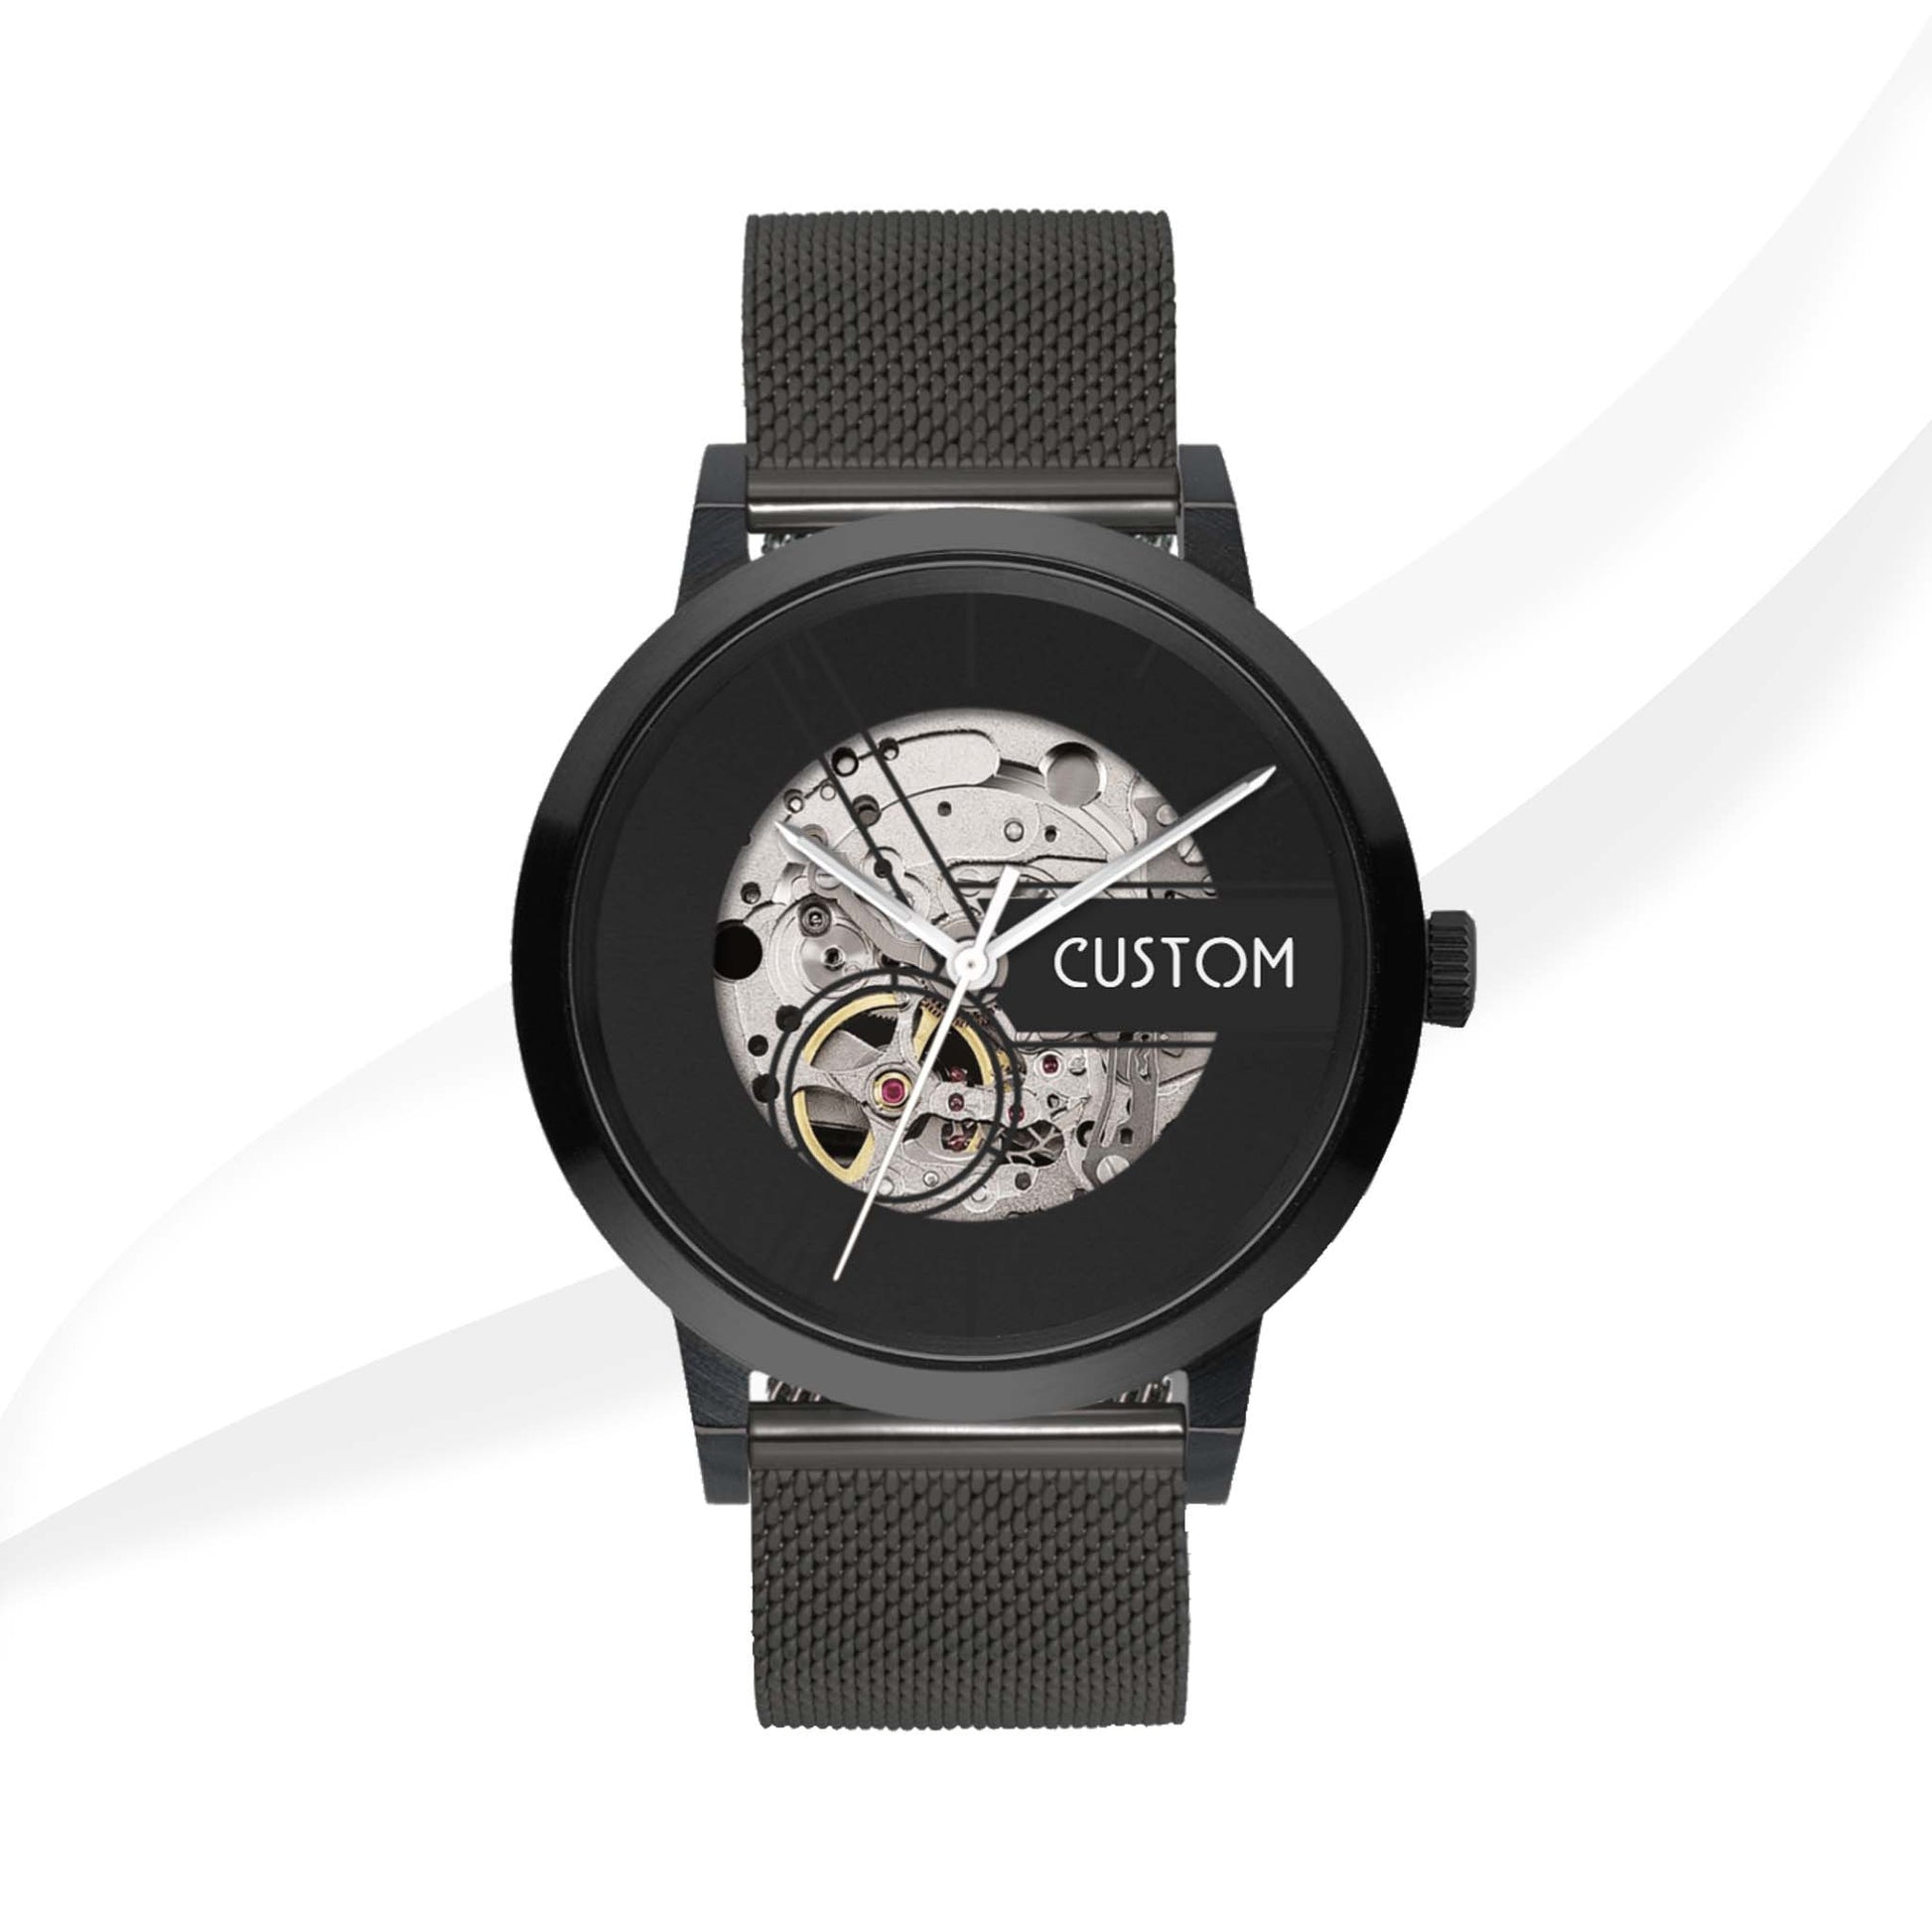 EONIQ custom skeleton watch - all black